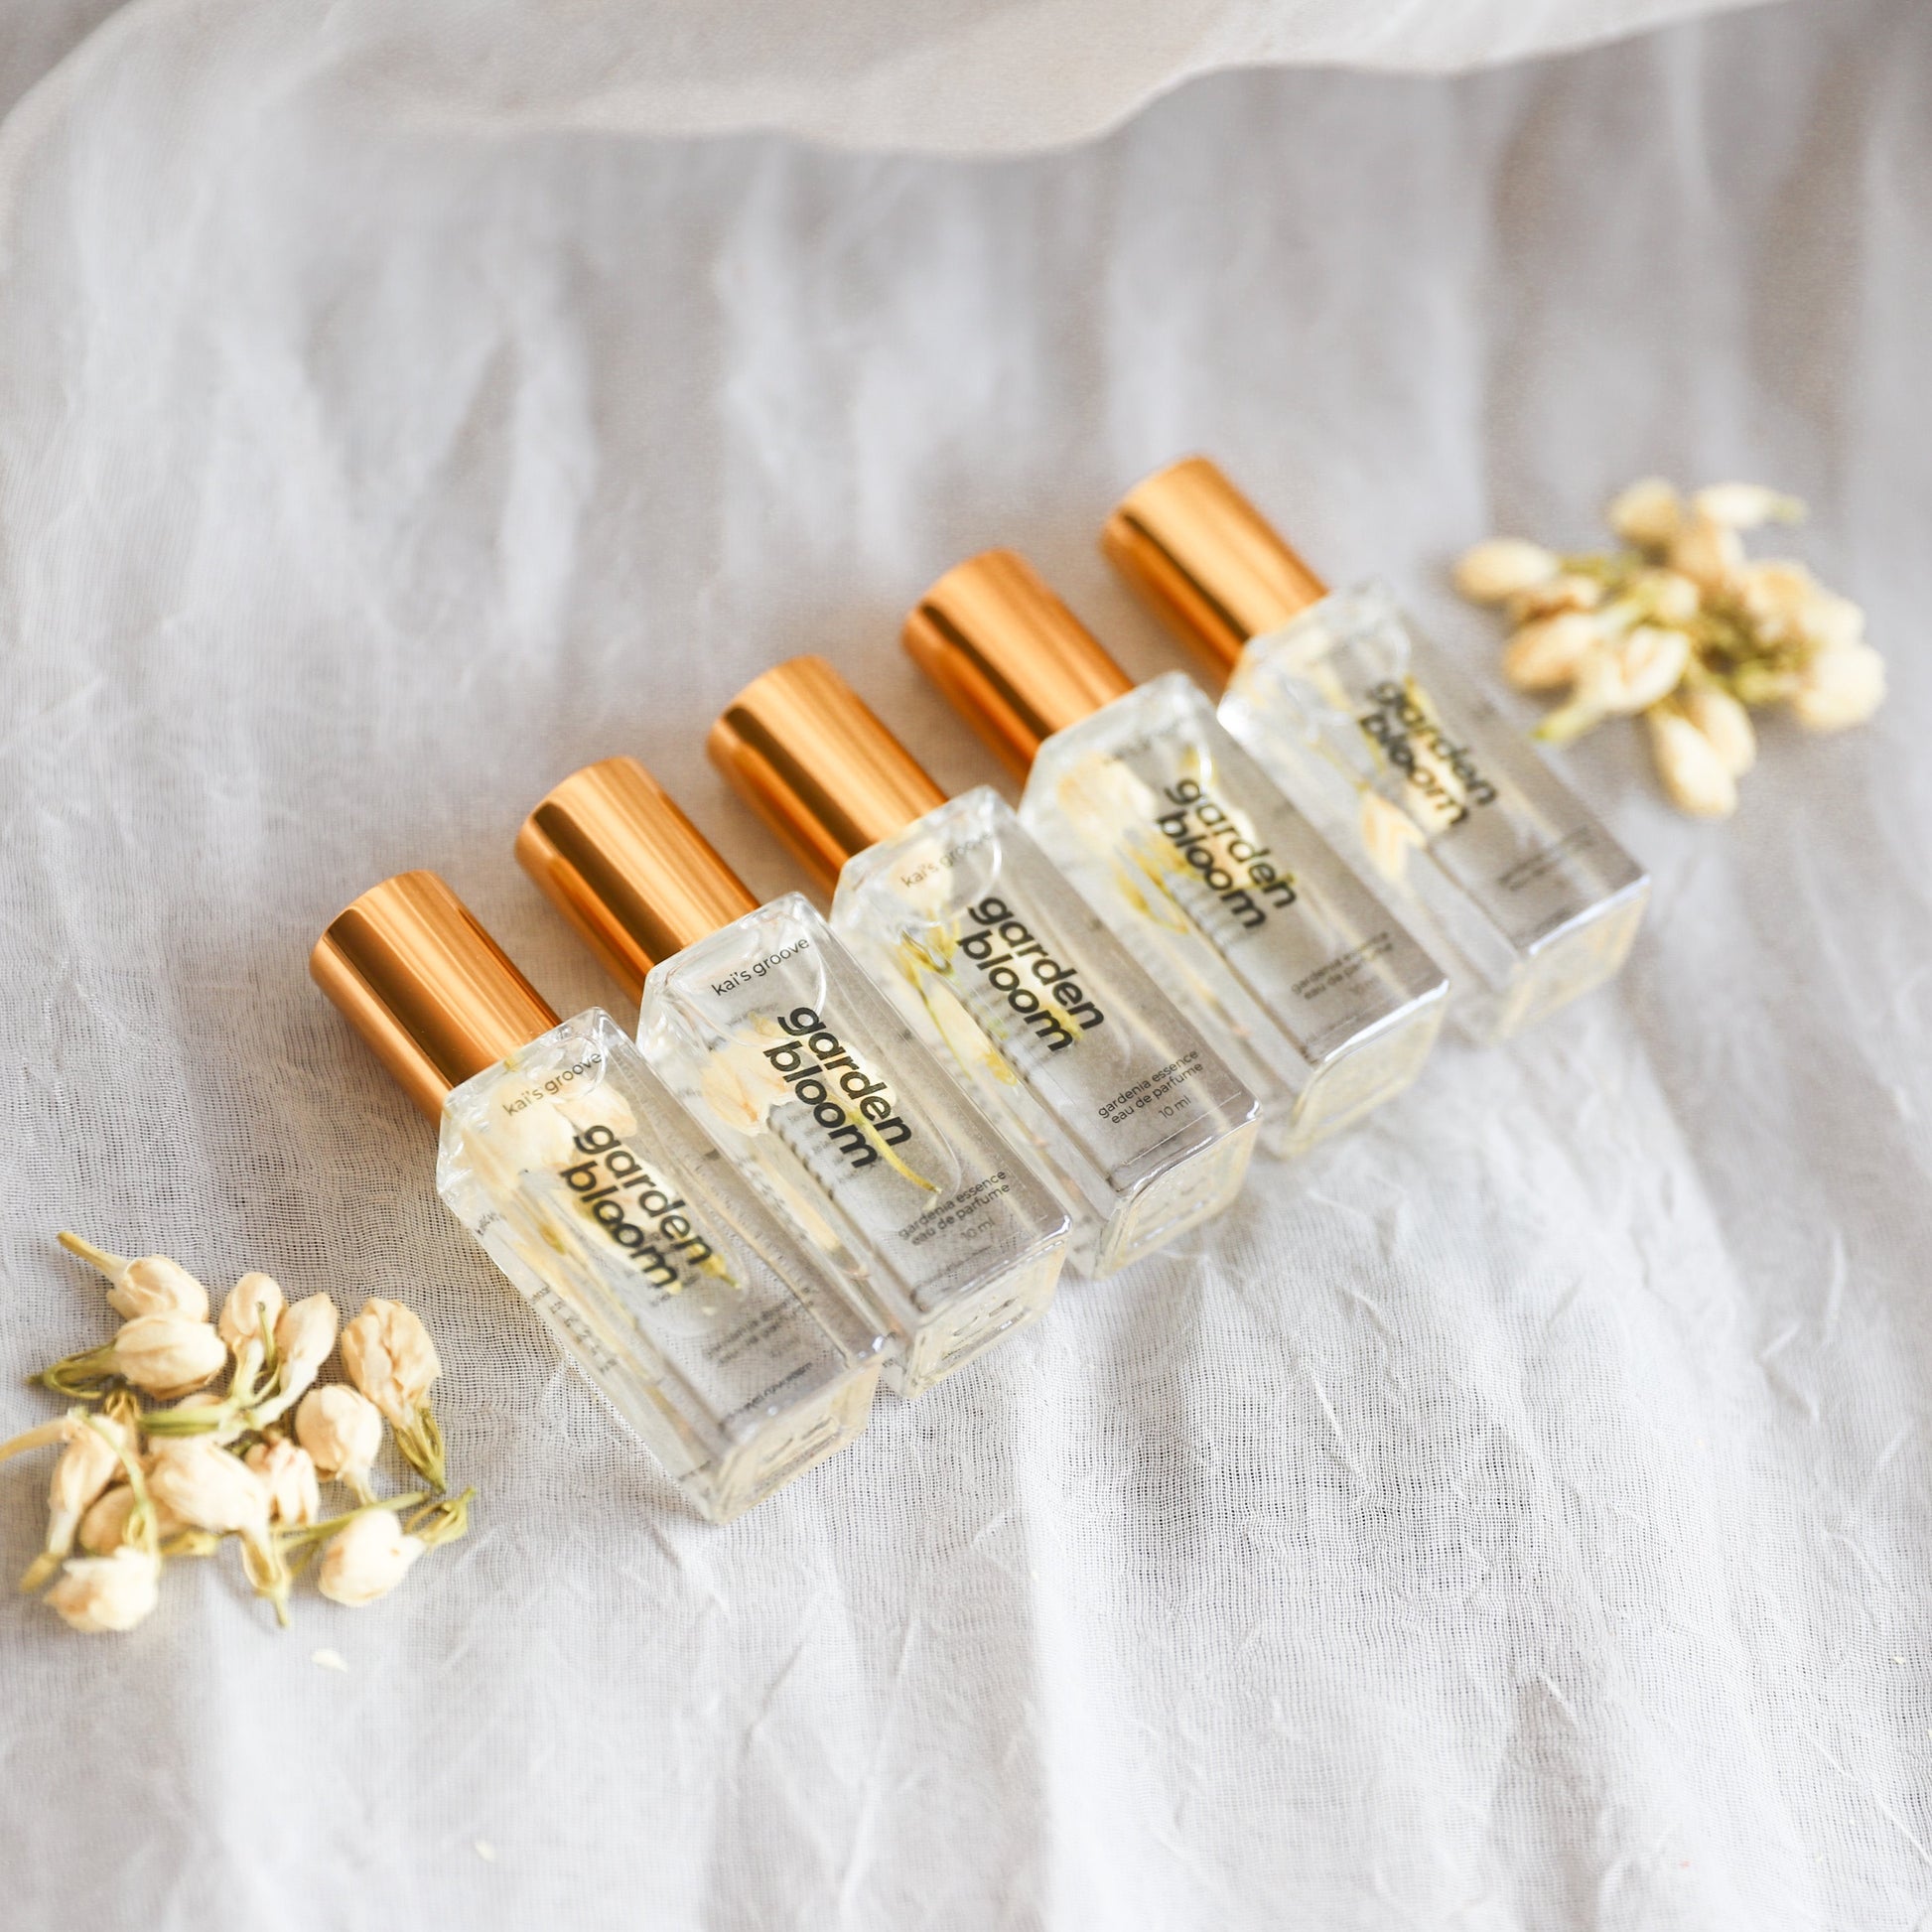 Gardenia Premium Grade Fragrance Oil - Perfume Oil - 10ml